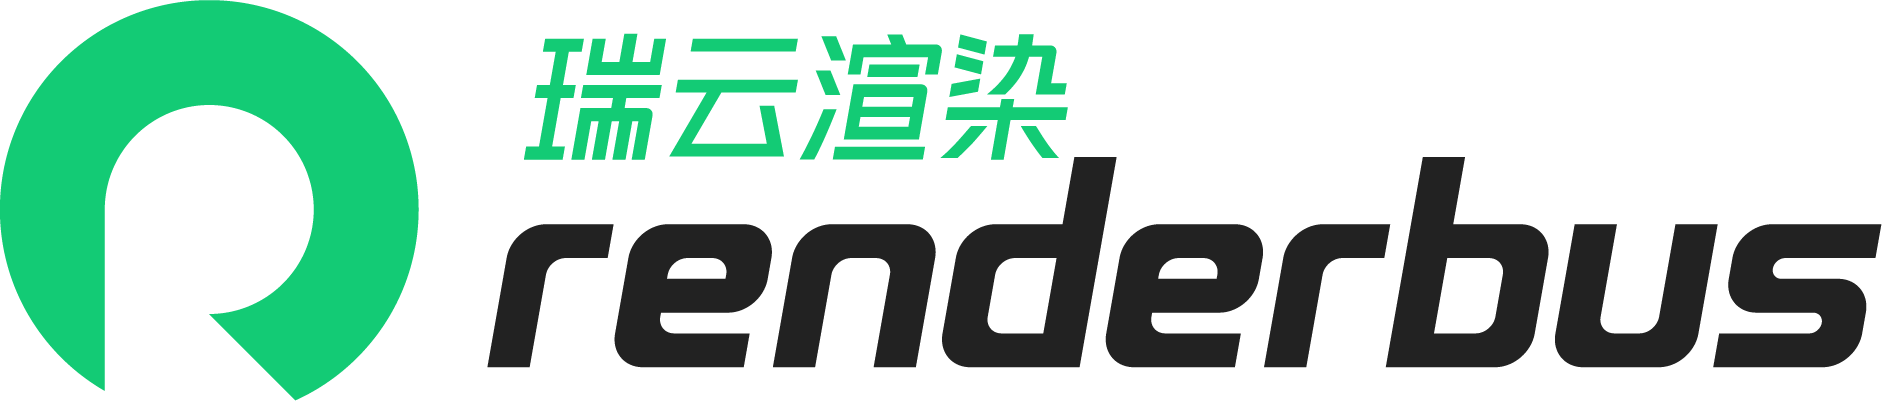 Renderbus瑞云渲染农场logo